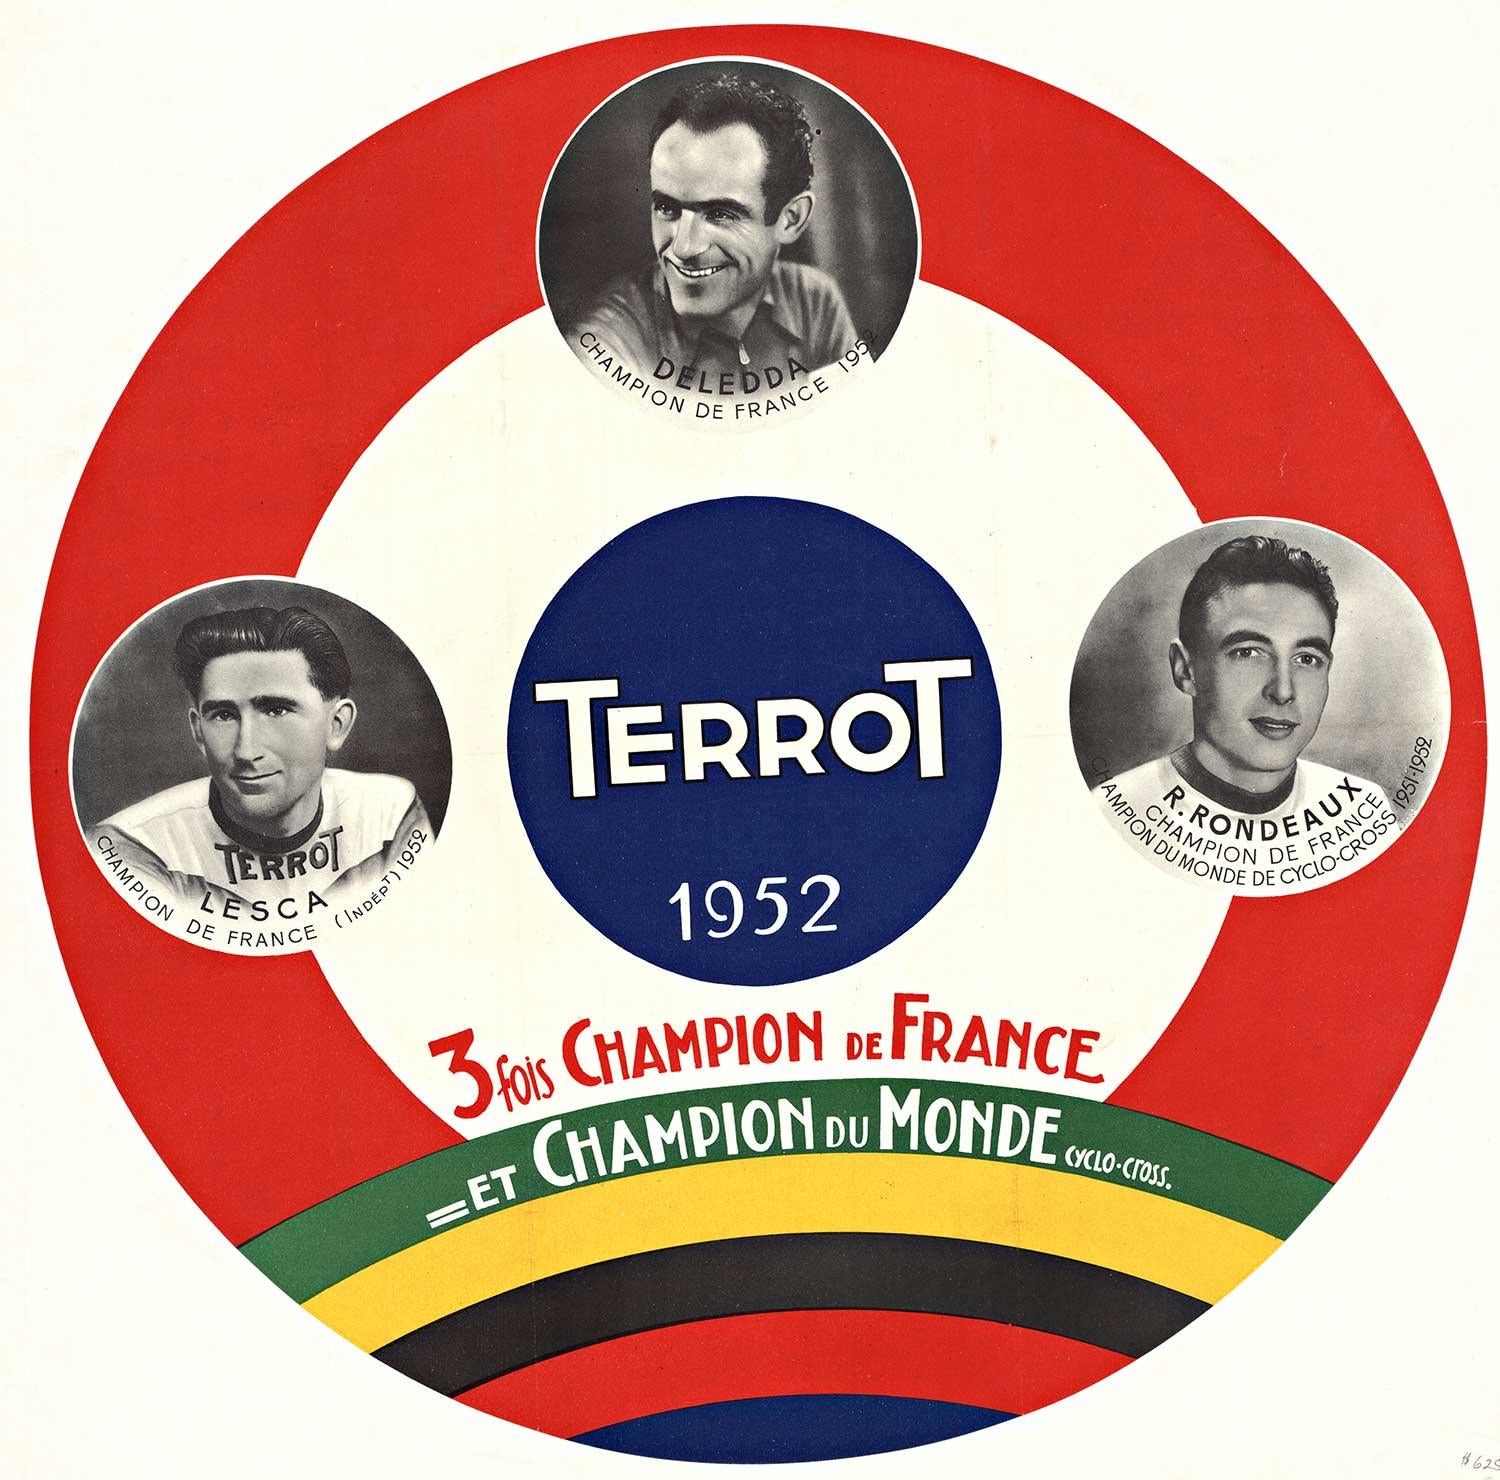 Unknown Print - Original "Terrot, 1952, 3 fois Champion de France" vintage bicycle racing poster